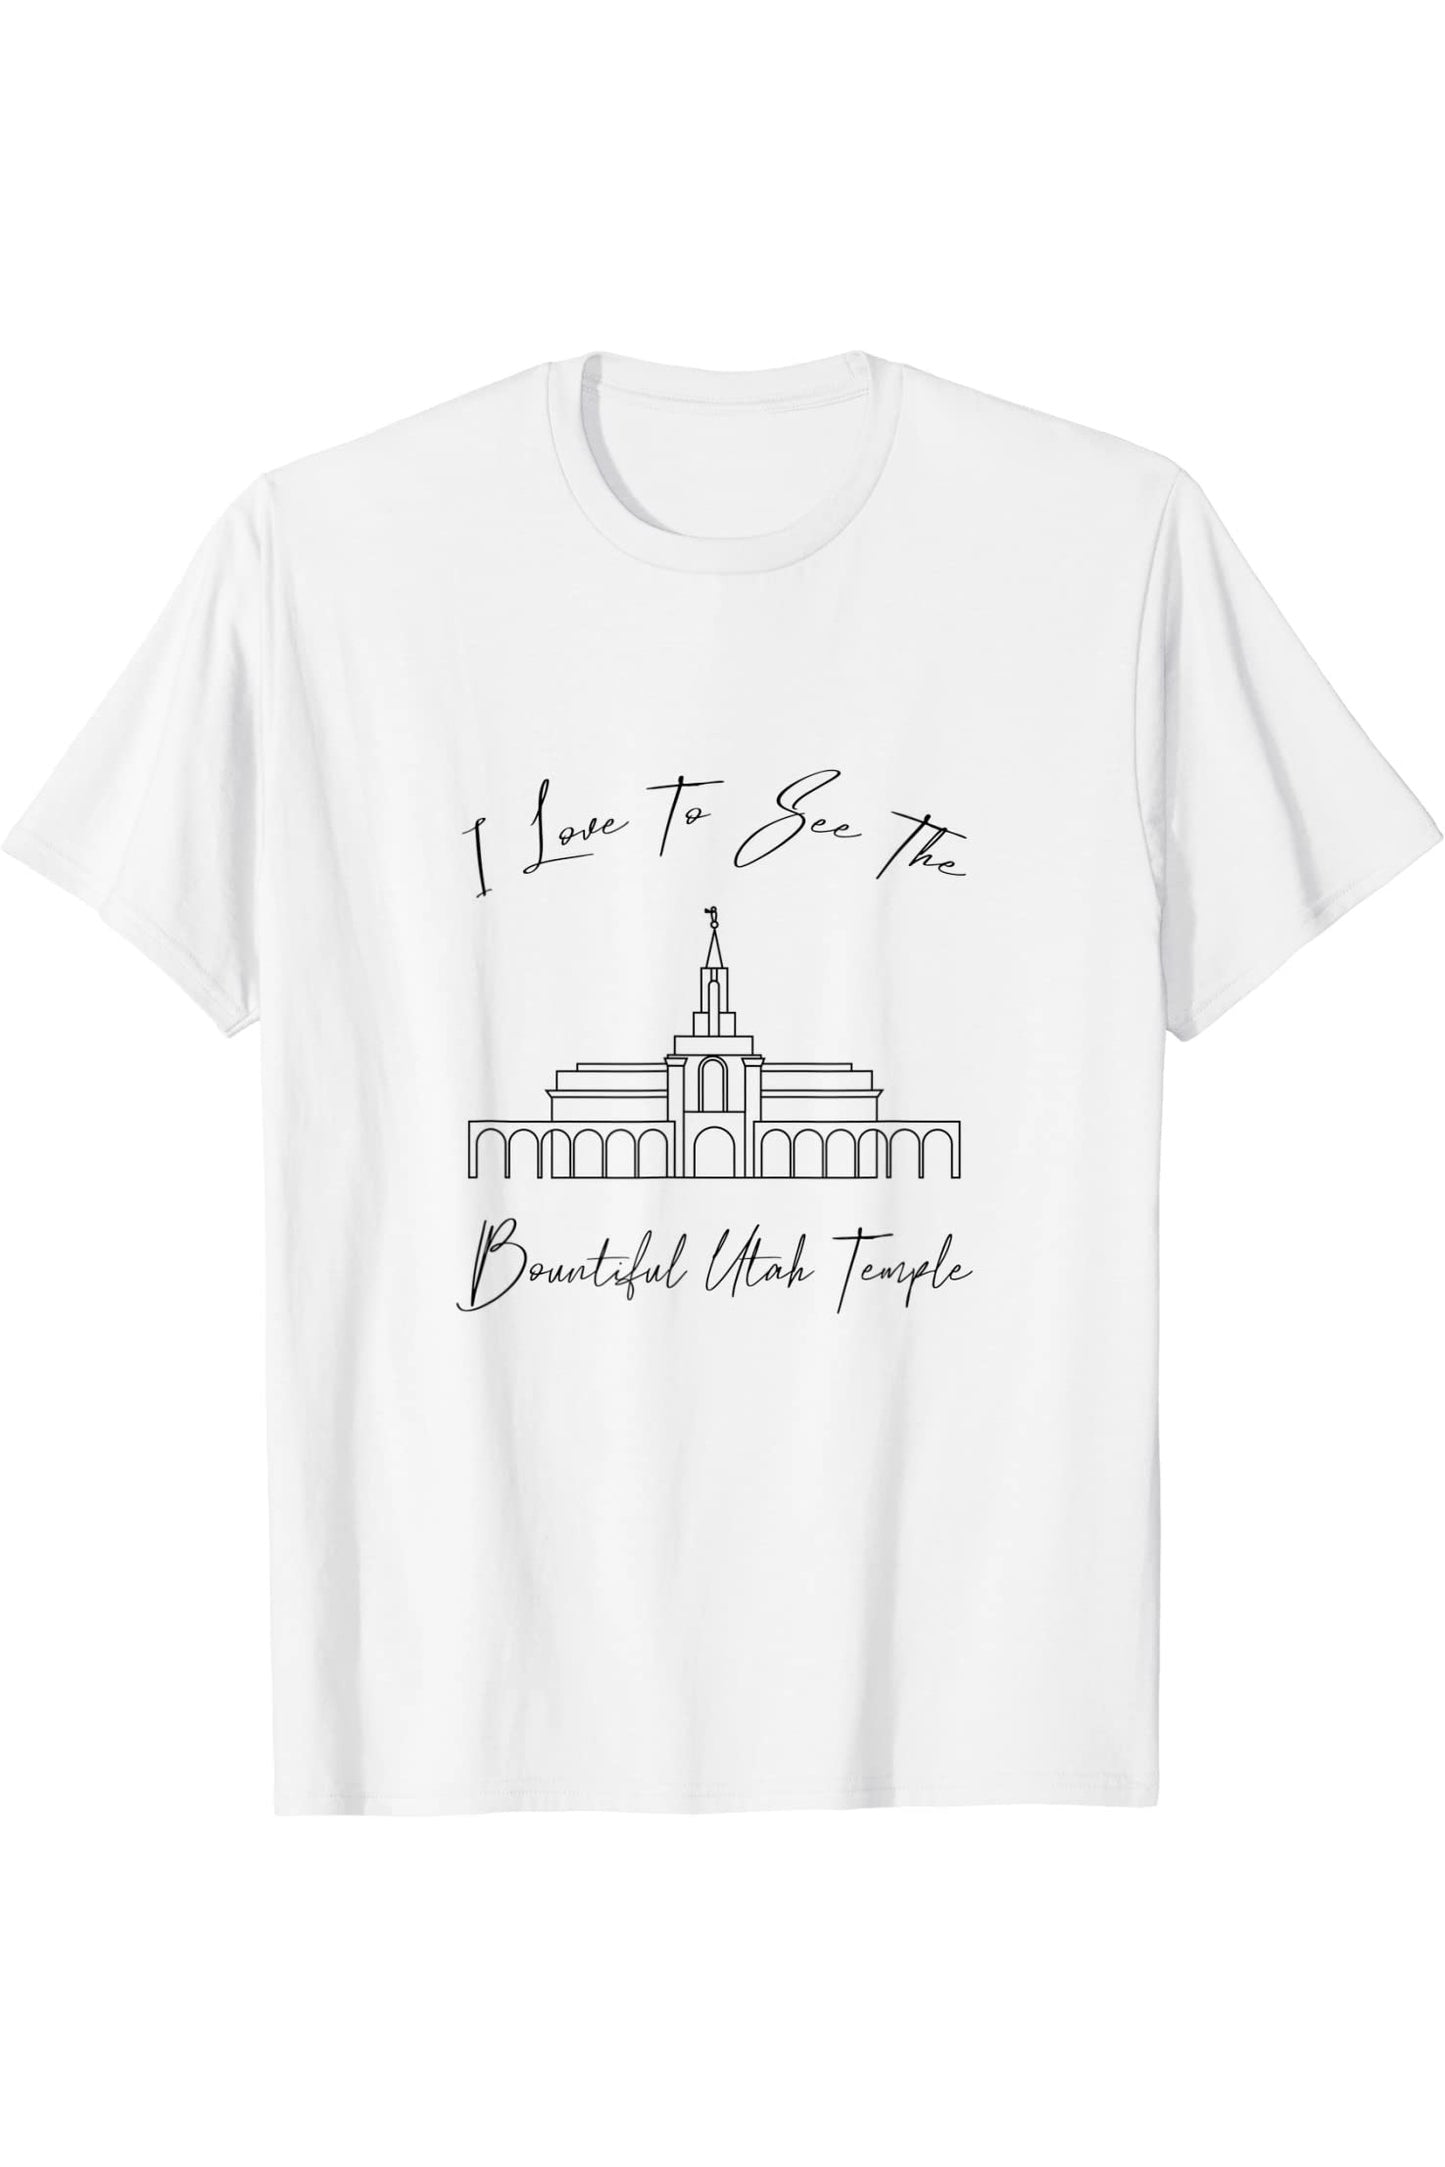 Bountiful Utah Temple T-Shirt - Calligraphy Style (English) US